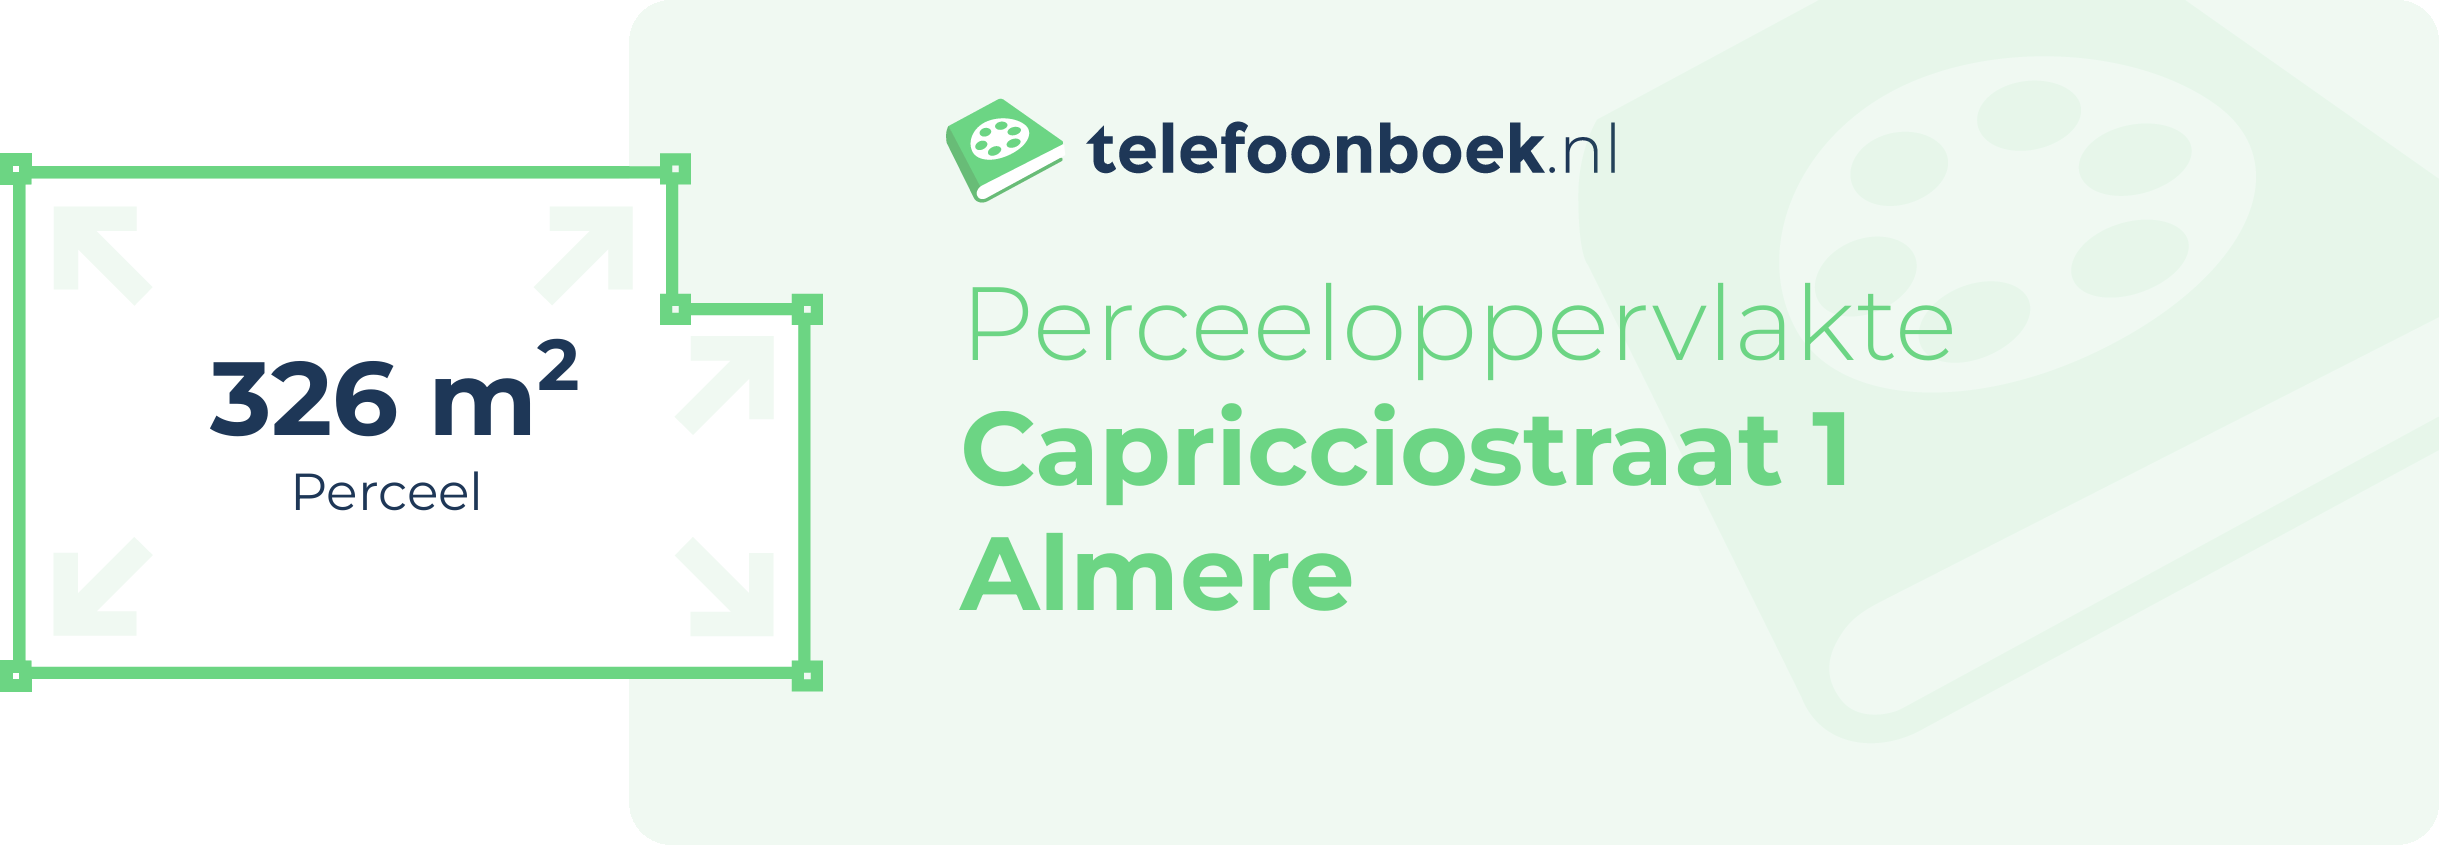 Perceeloppervlakte Capricciostraat 1 Almere